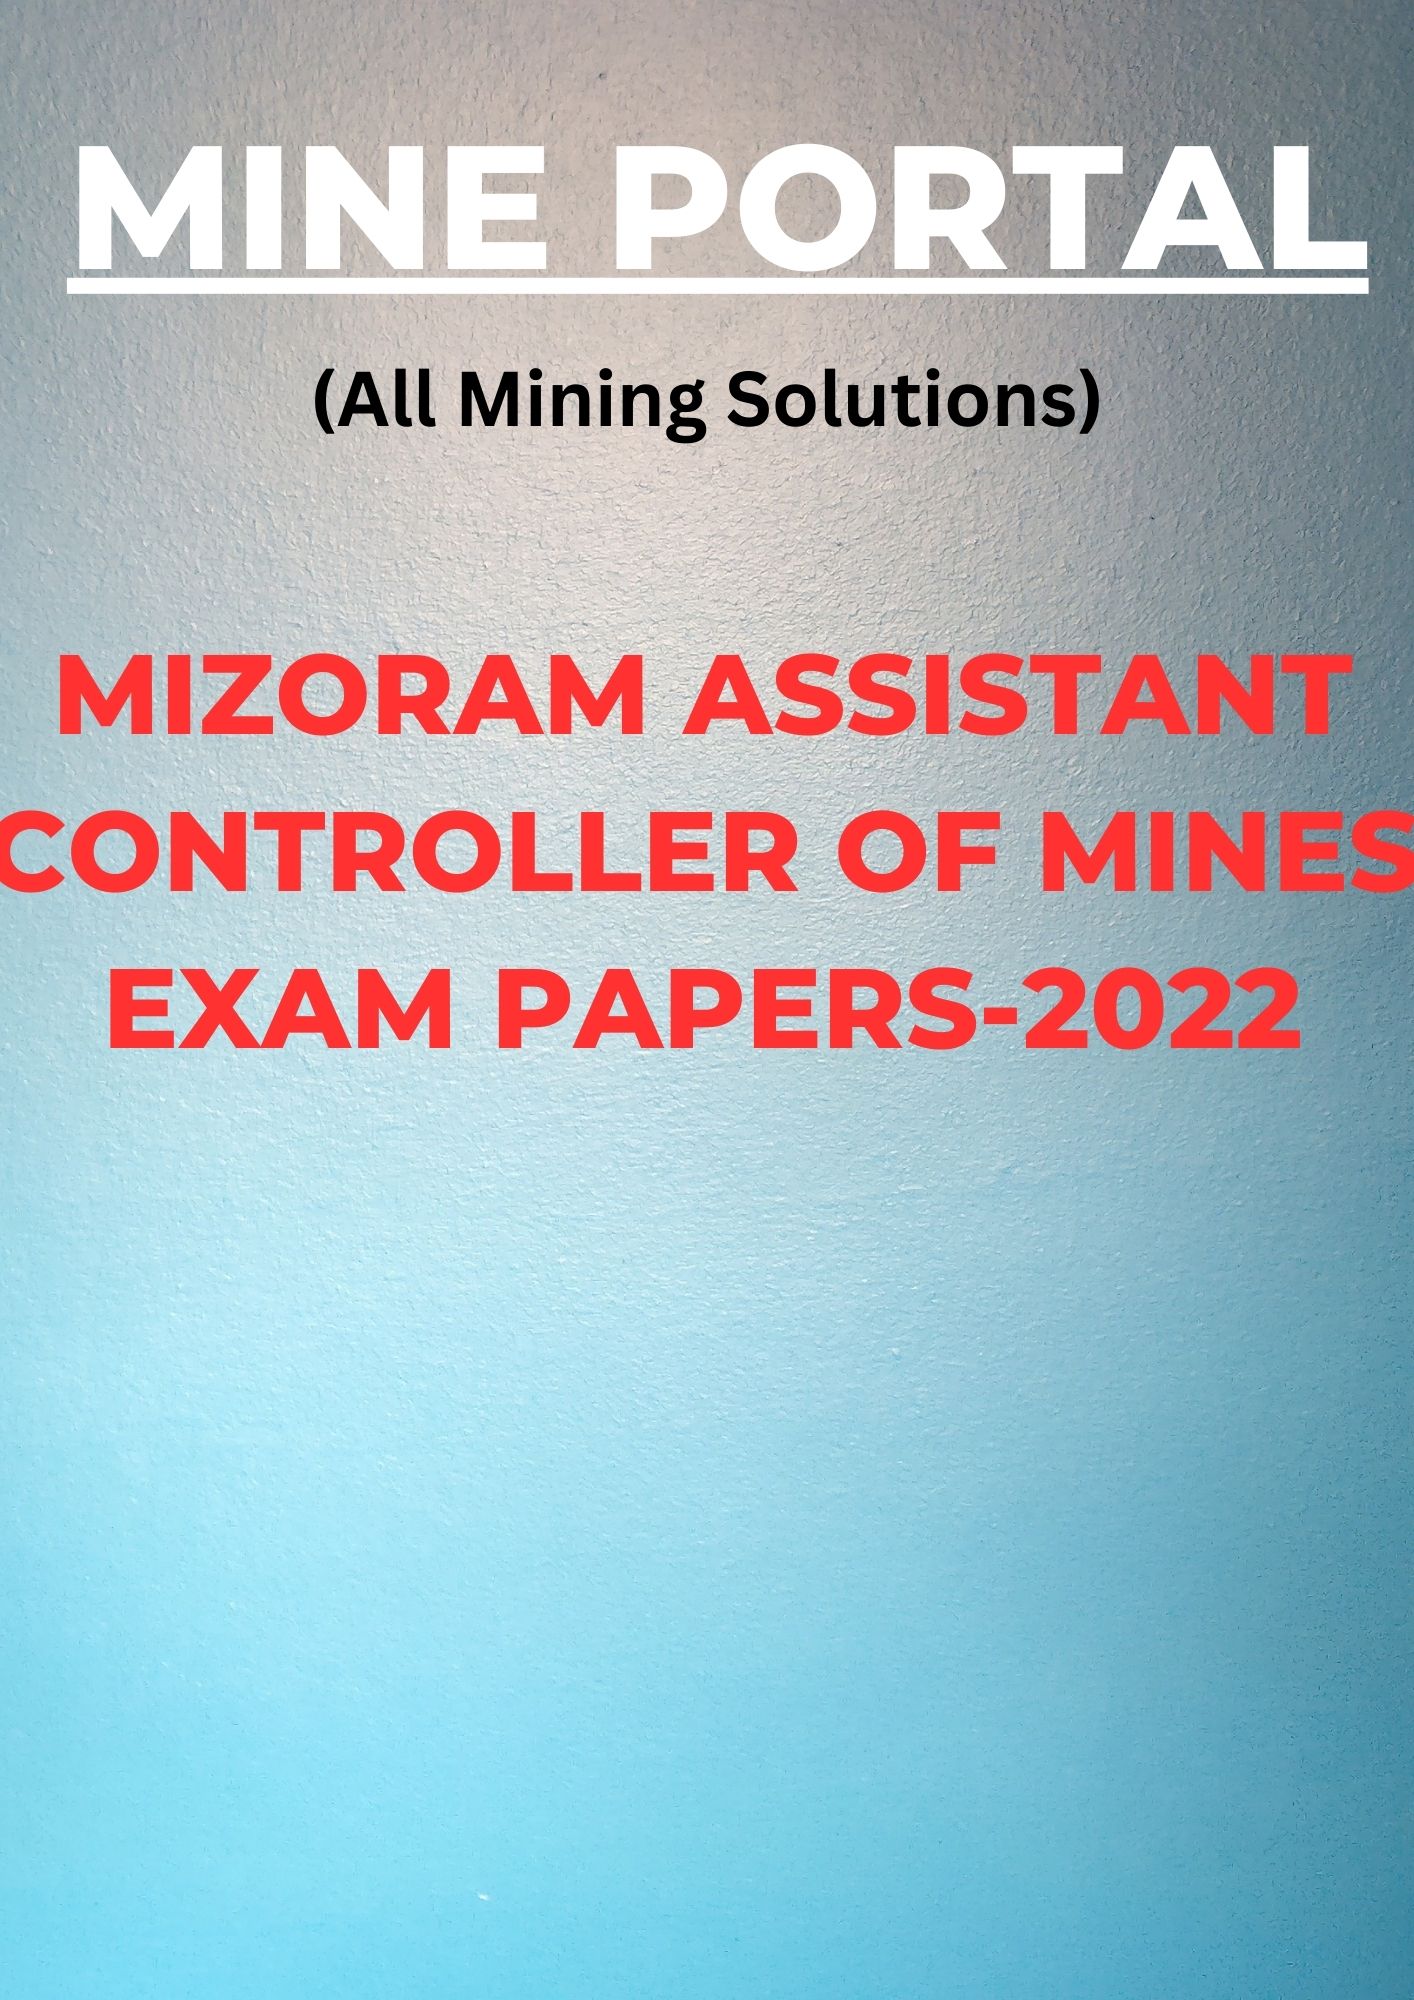 MIZORAM ASSISTANT CONTROLLER OF MINES EXAM PAPERS